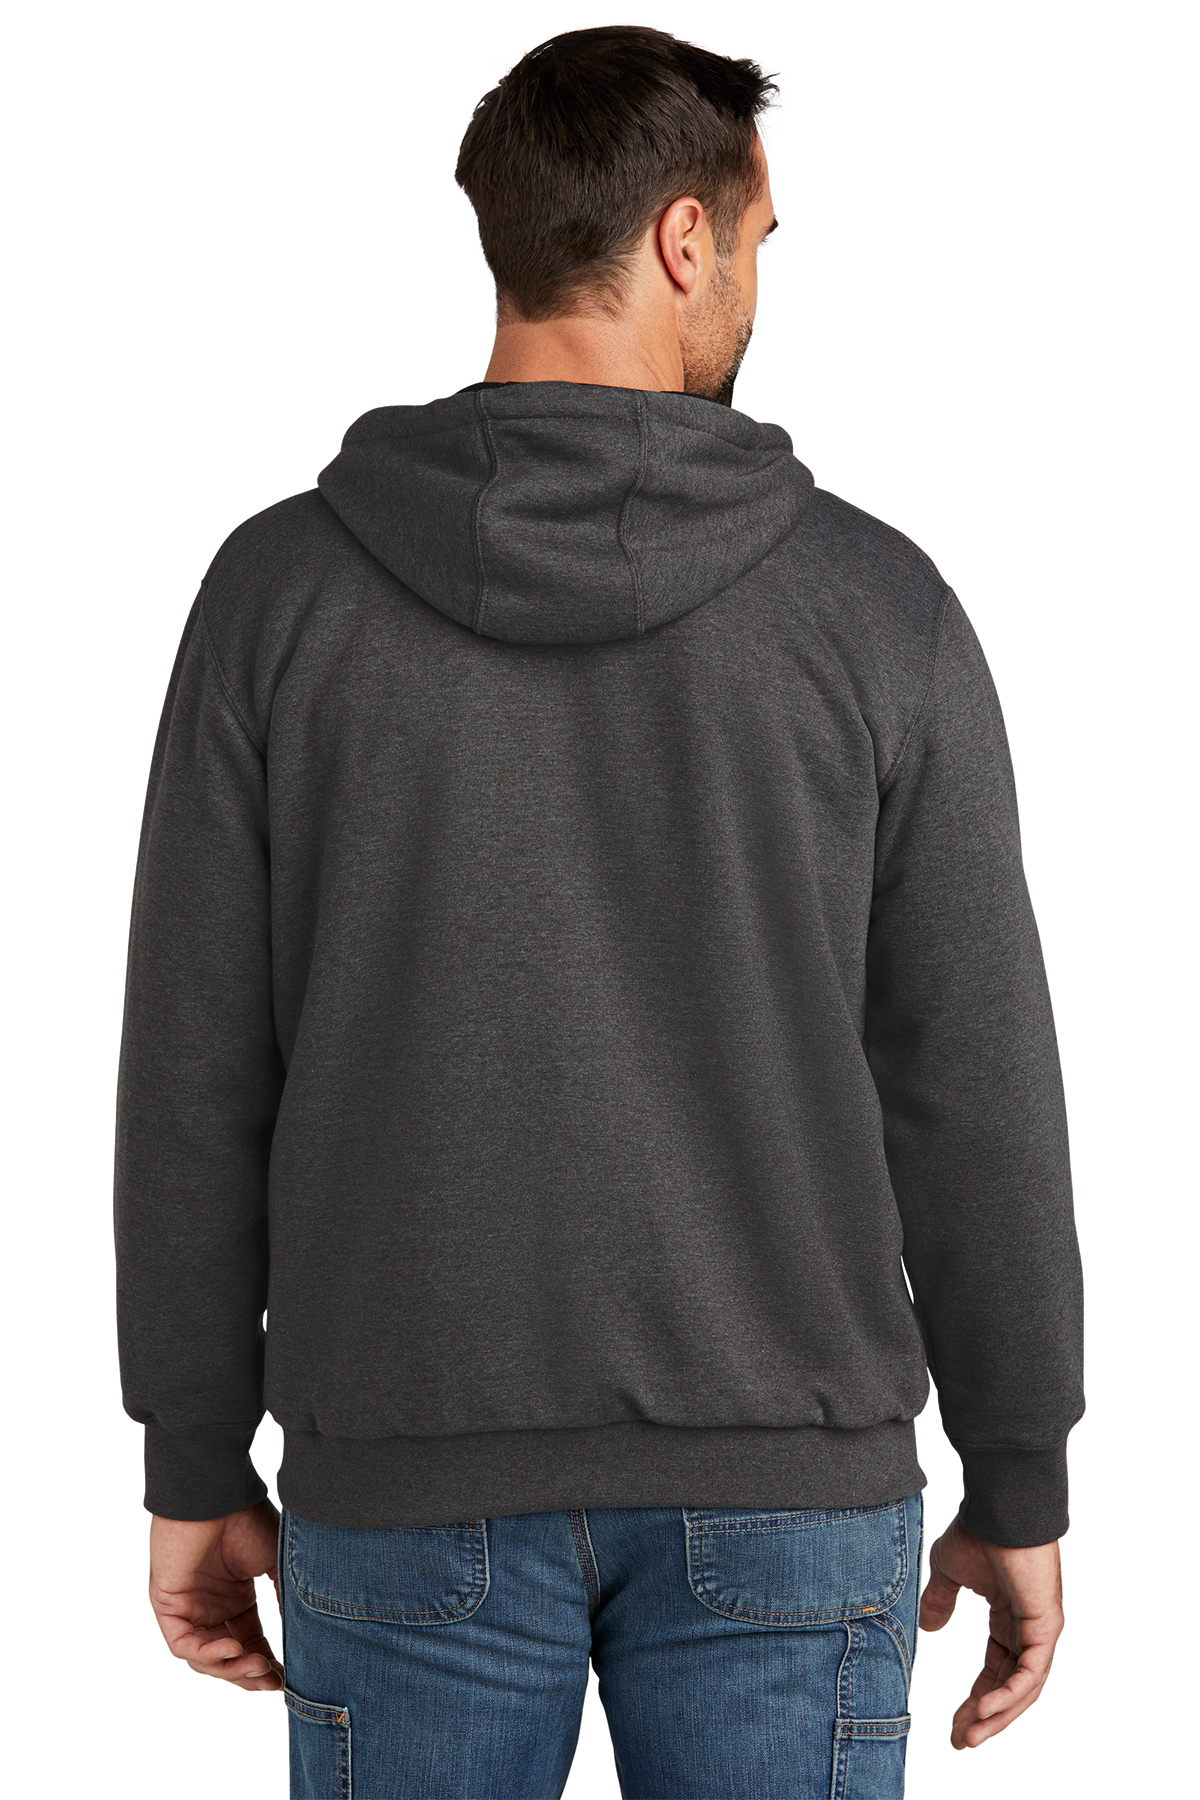 Carhartt Midweight Thermal-Lined Full-Zip Sweatshirt | Product | SanMar